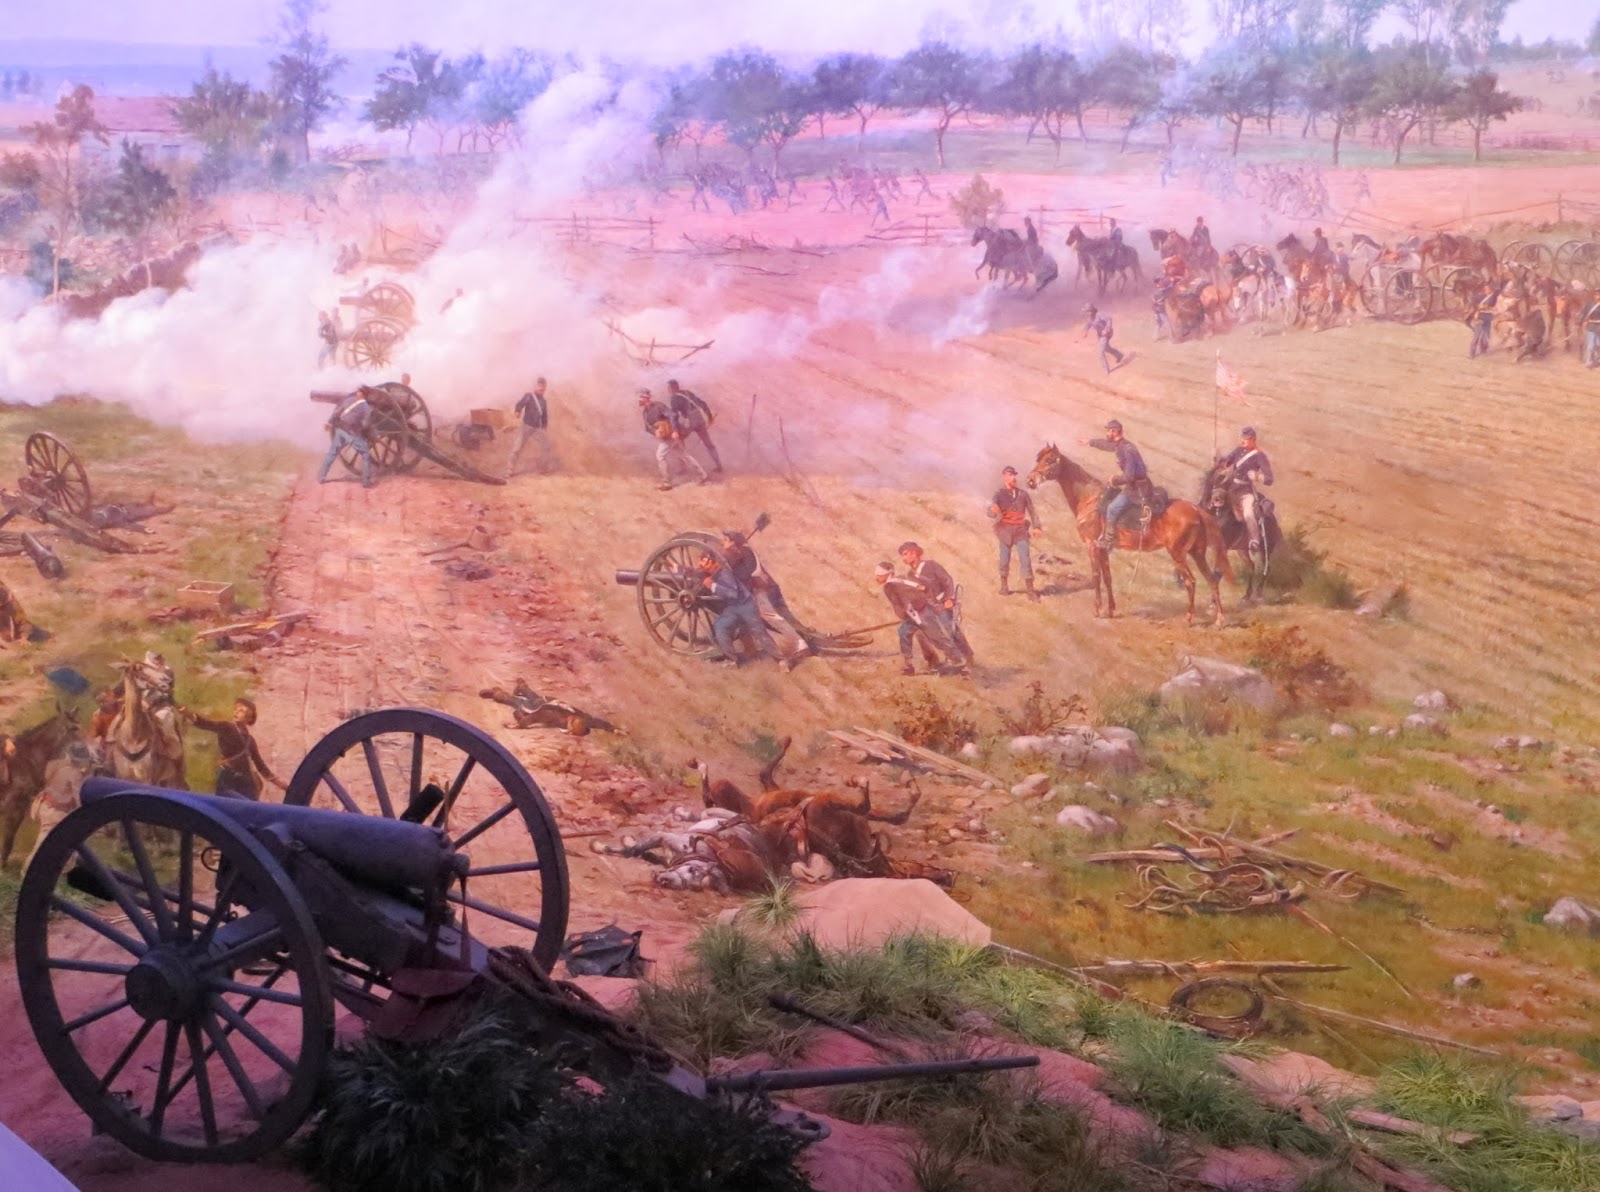 Battle of gettysburg essay questions